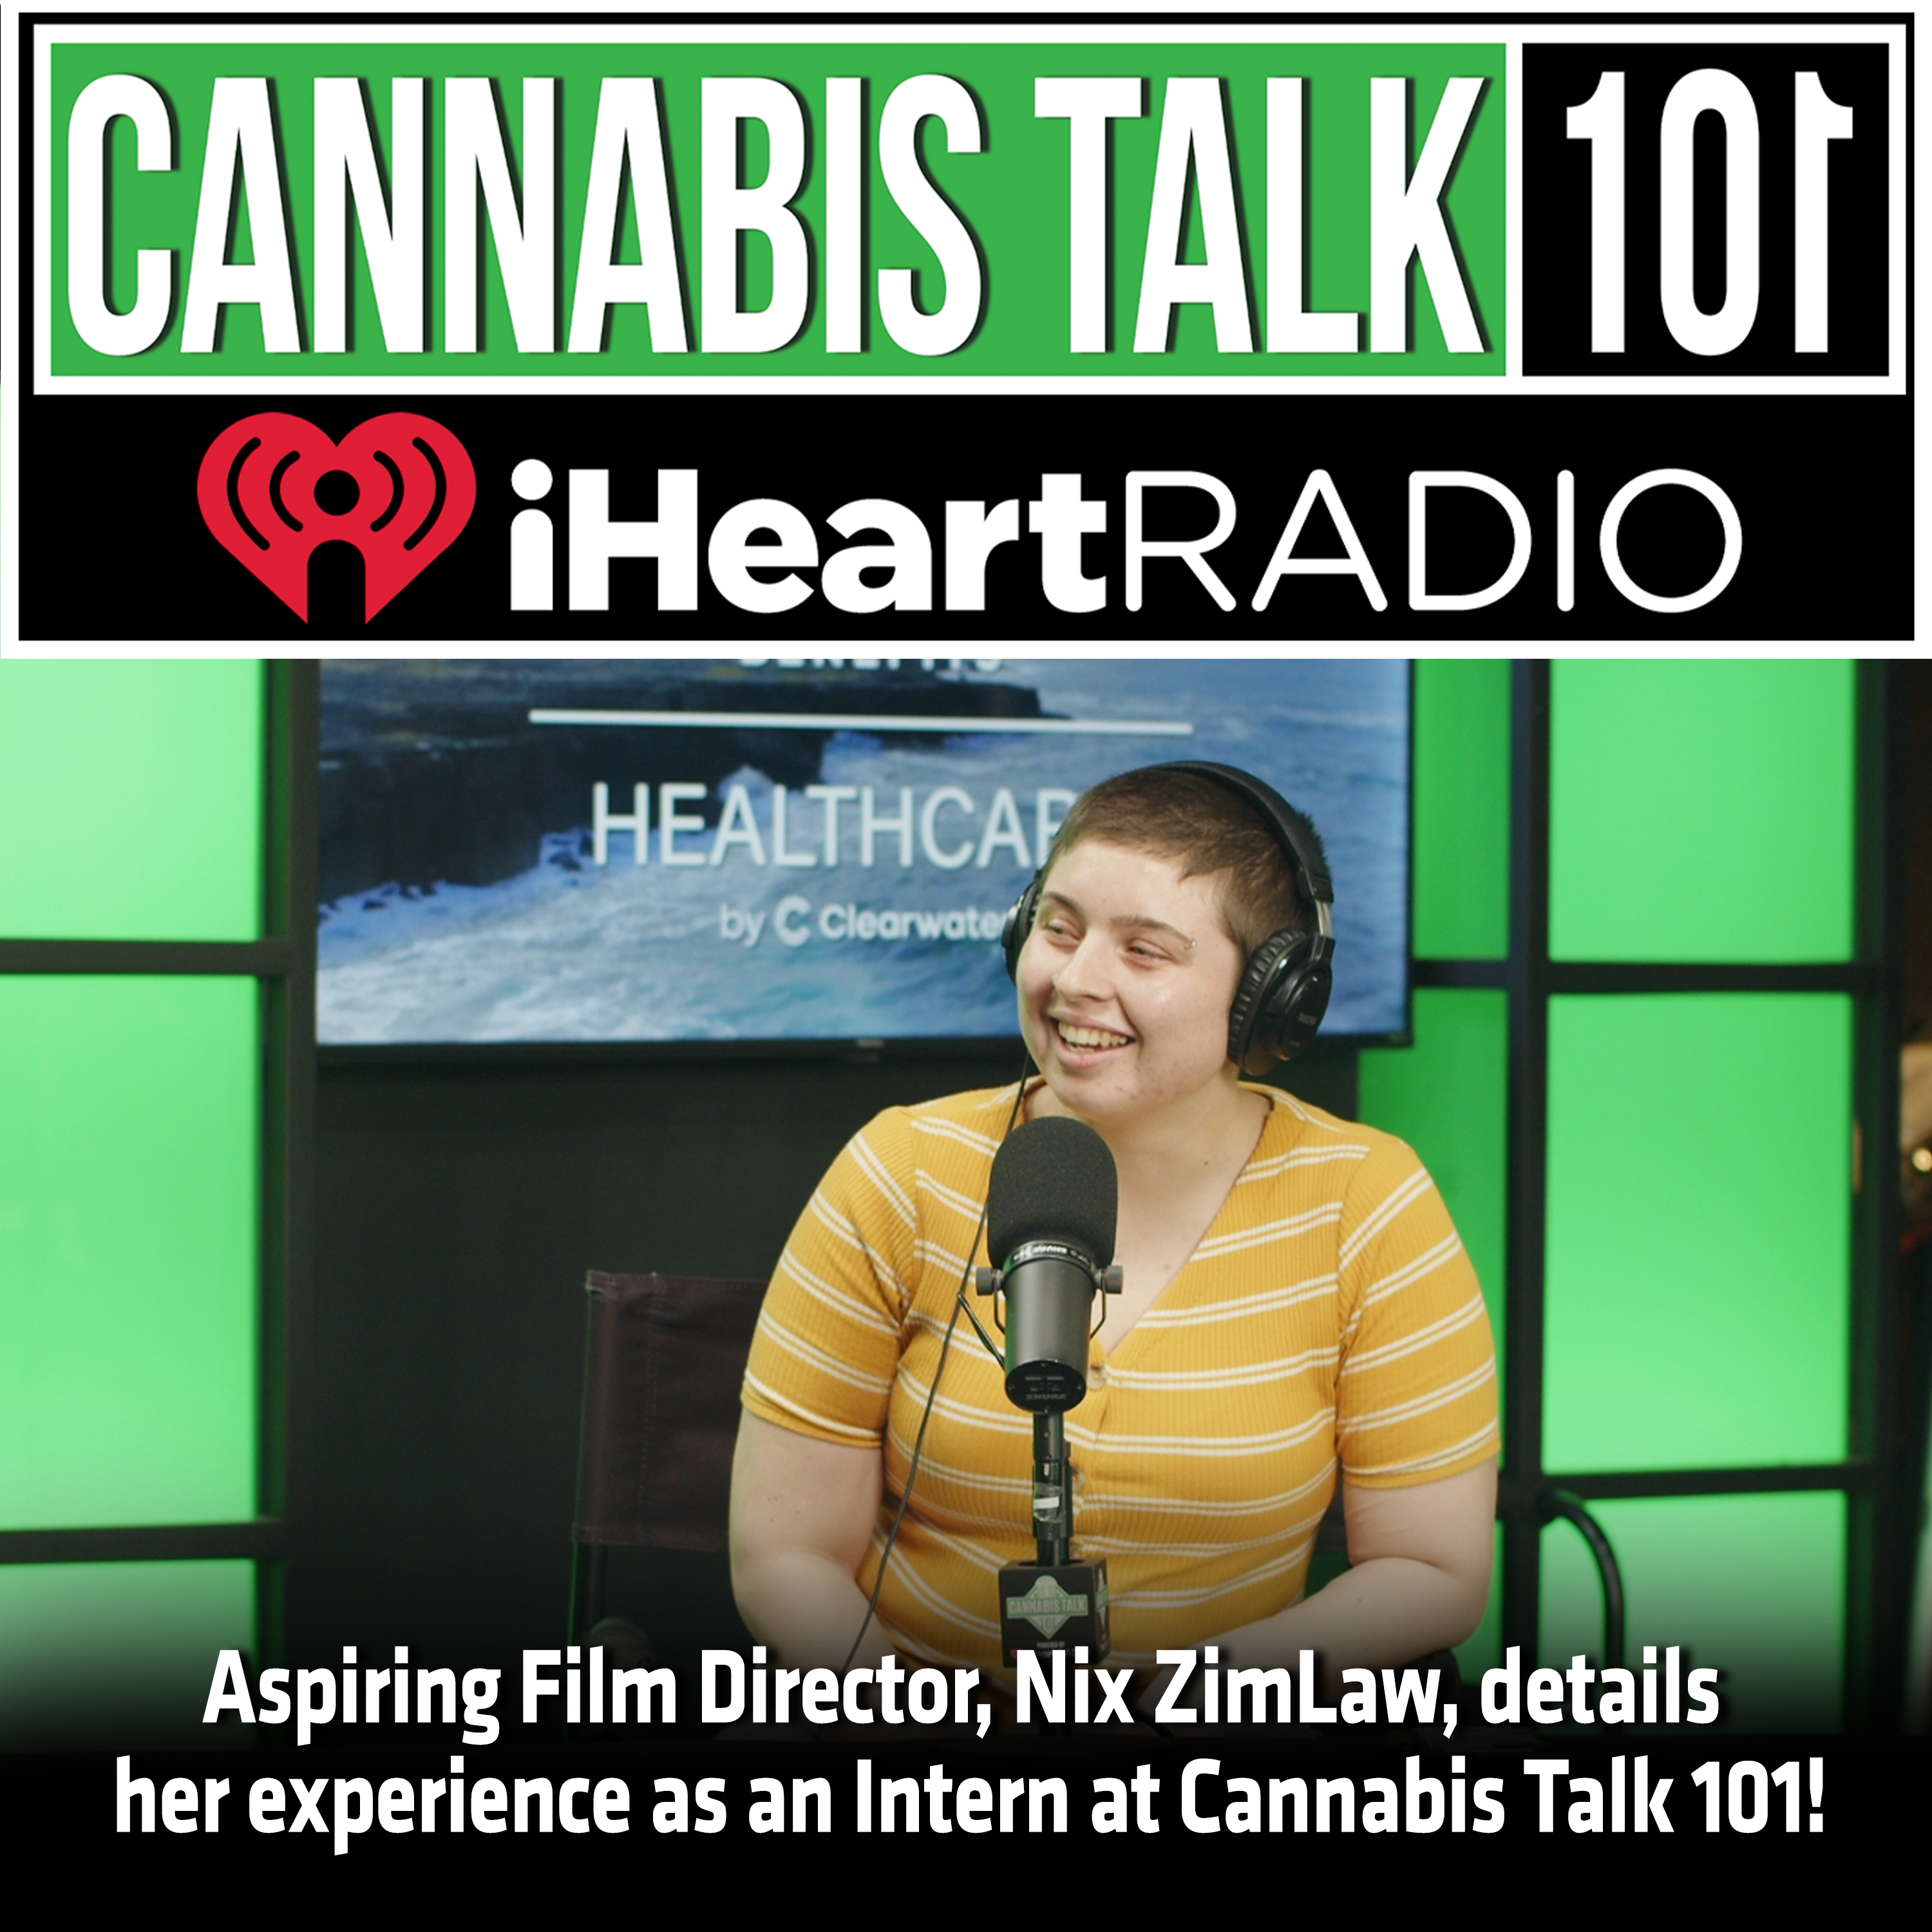 Aspiring Film Director, Nix ZimLaw, details her experience as an Intern at Cannabis Talk 101!